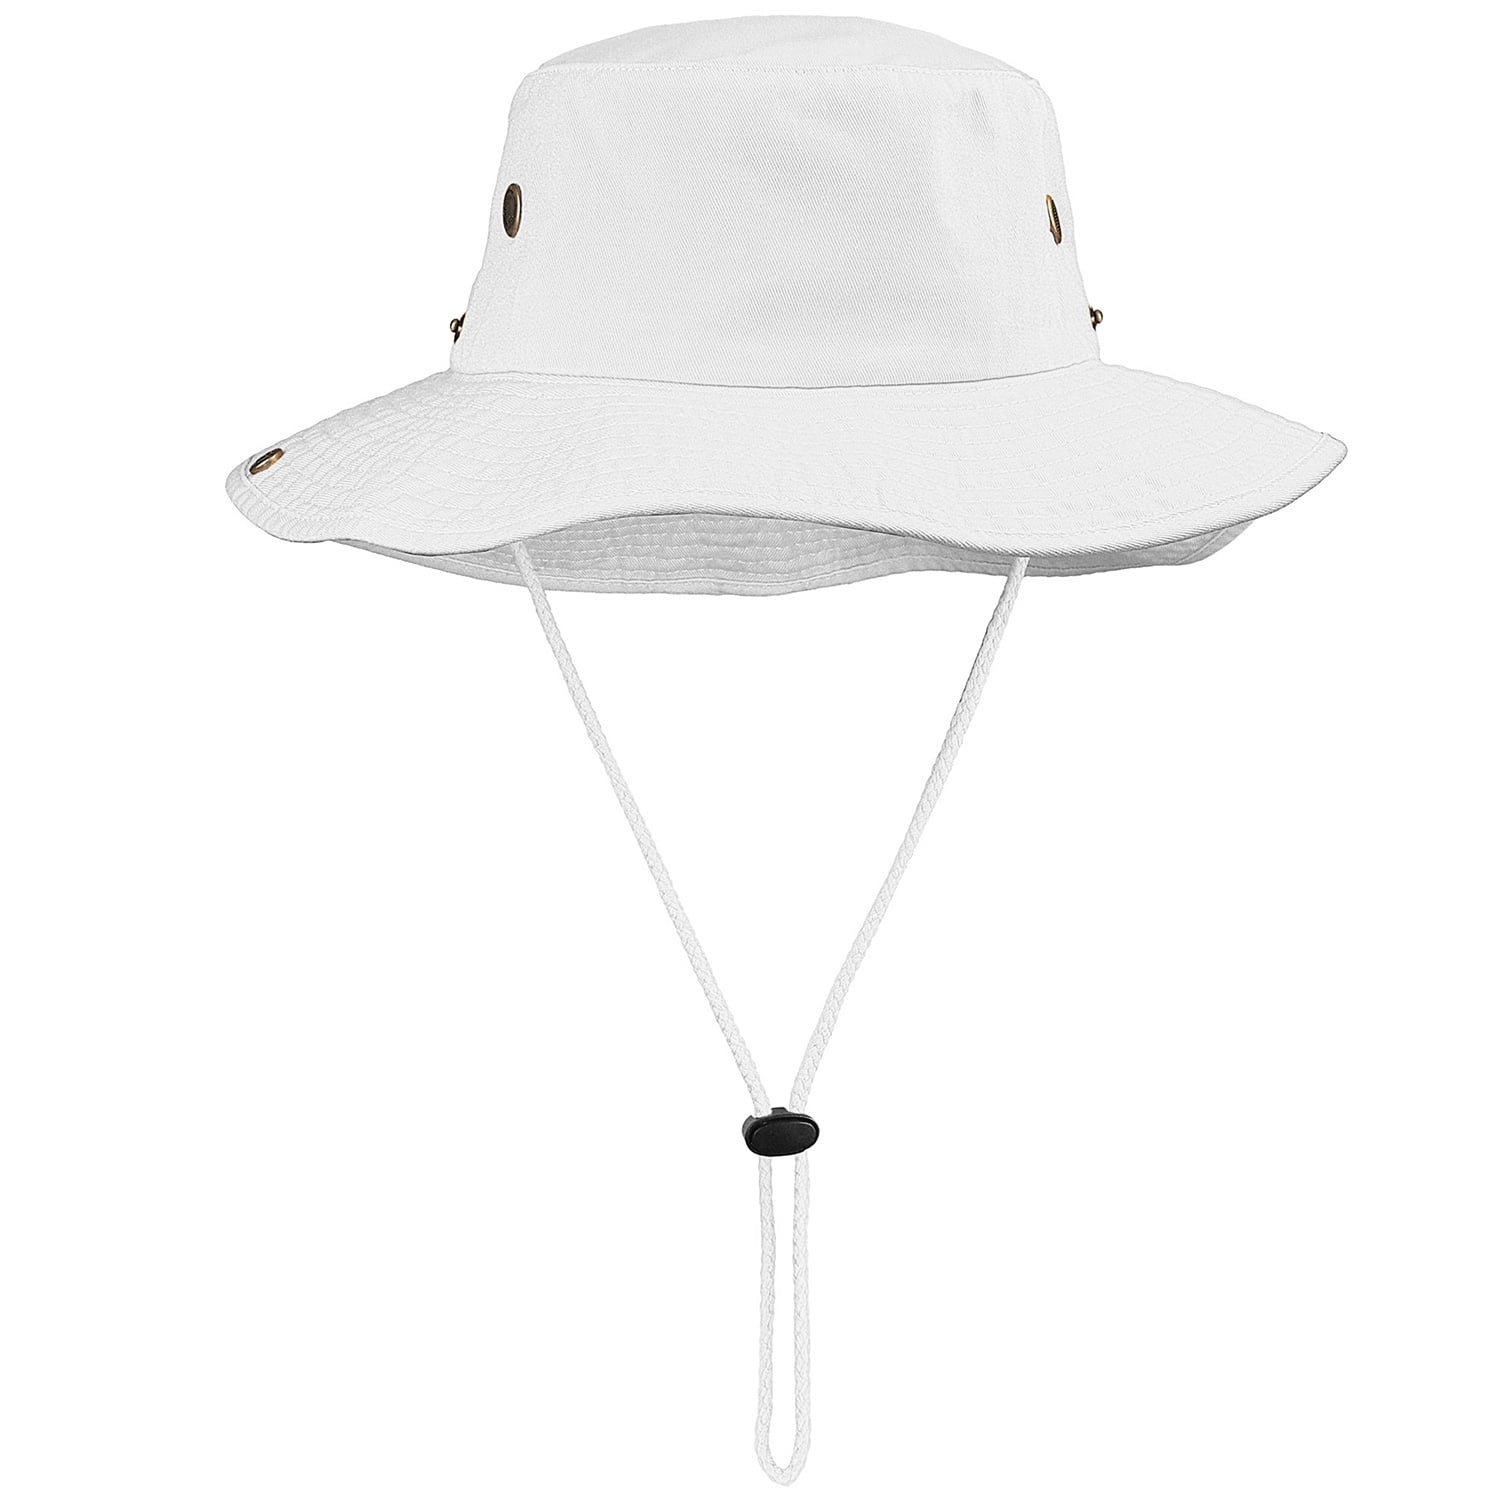 YSWPNA 2XL Bucket Hat Top View of White Dice Summer Unisex Fishing